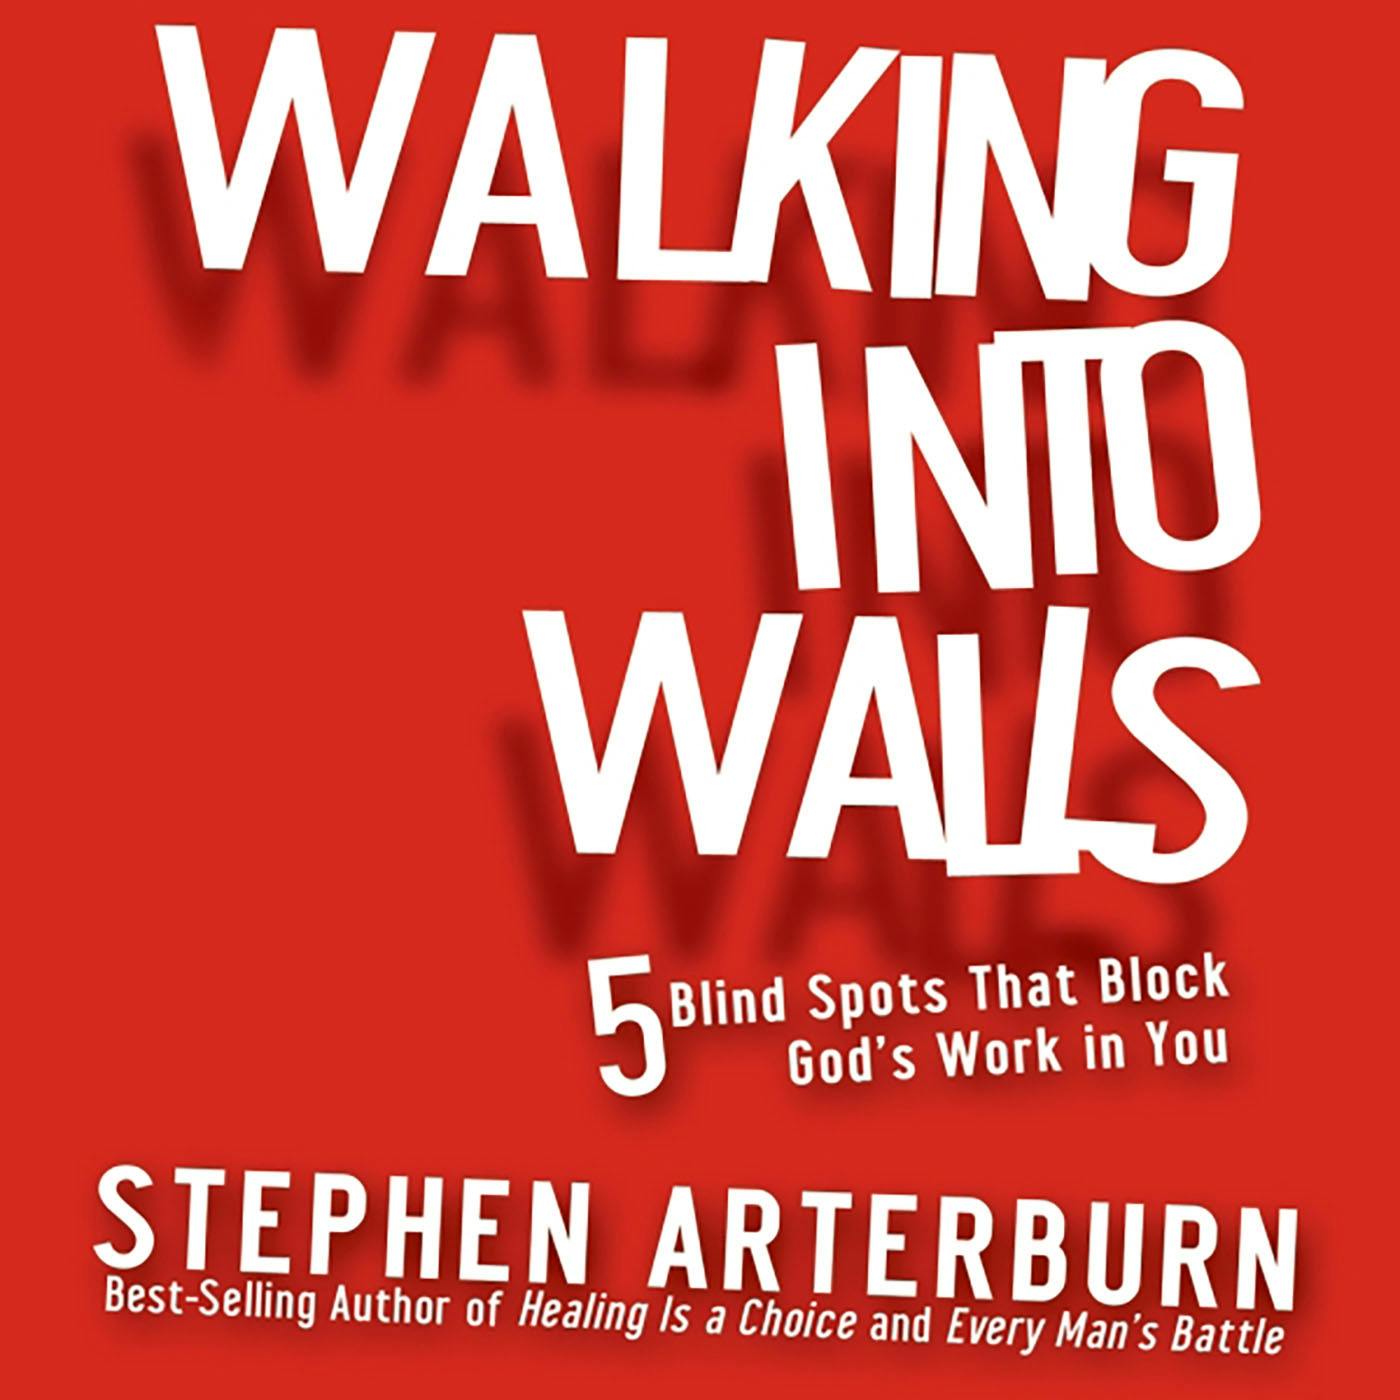 Walking Into Walls: 5 Blind Spots That Block God's Work in You - Stephen Arterburn